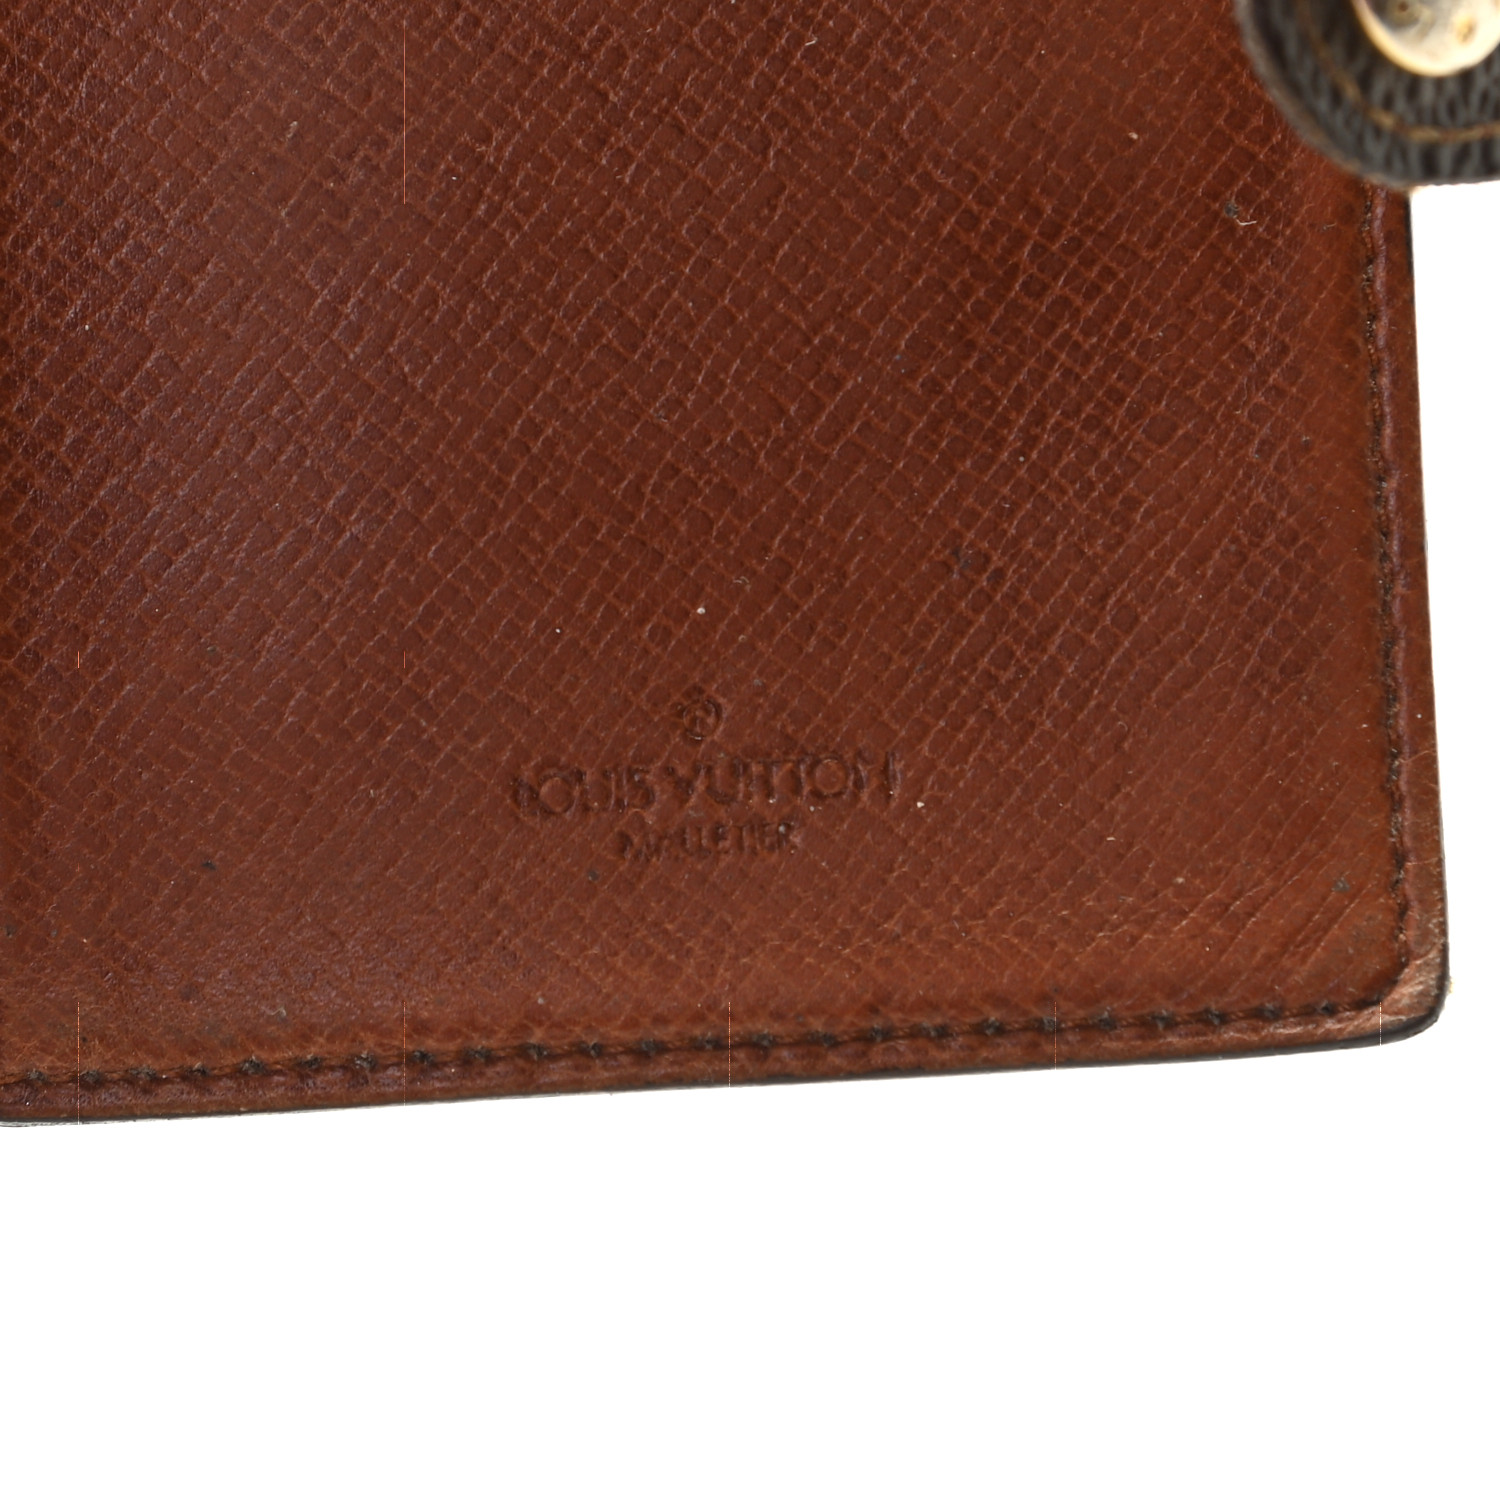 LOUIS VUITTON Monogram Credit Card Holder Wallet FASHIONPHILE